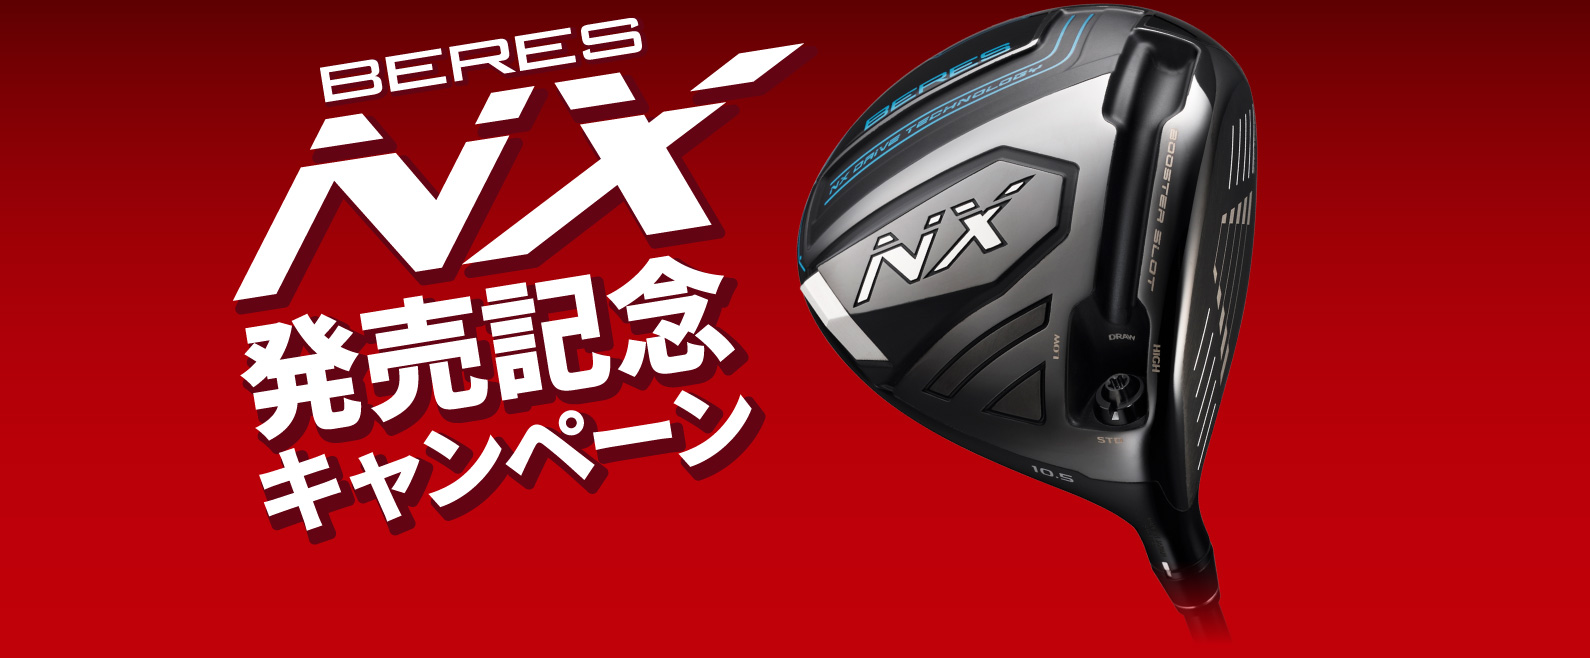 BERES NX 発売記念キャンペーン